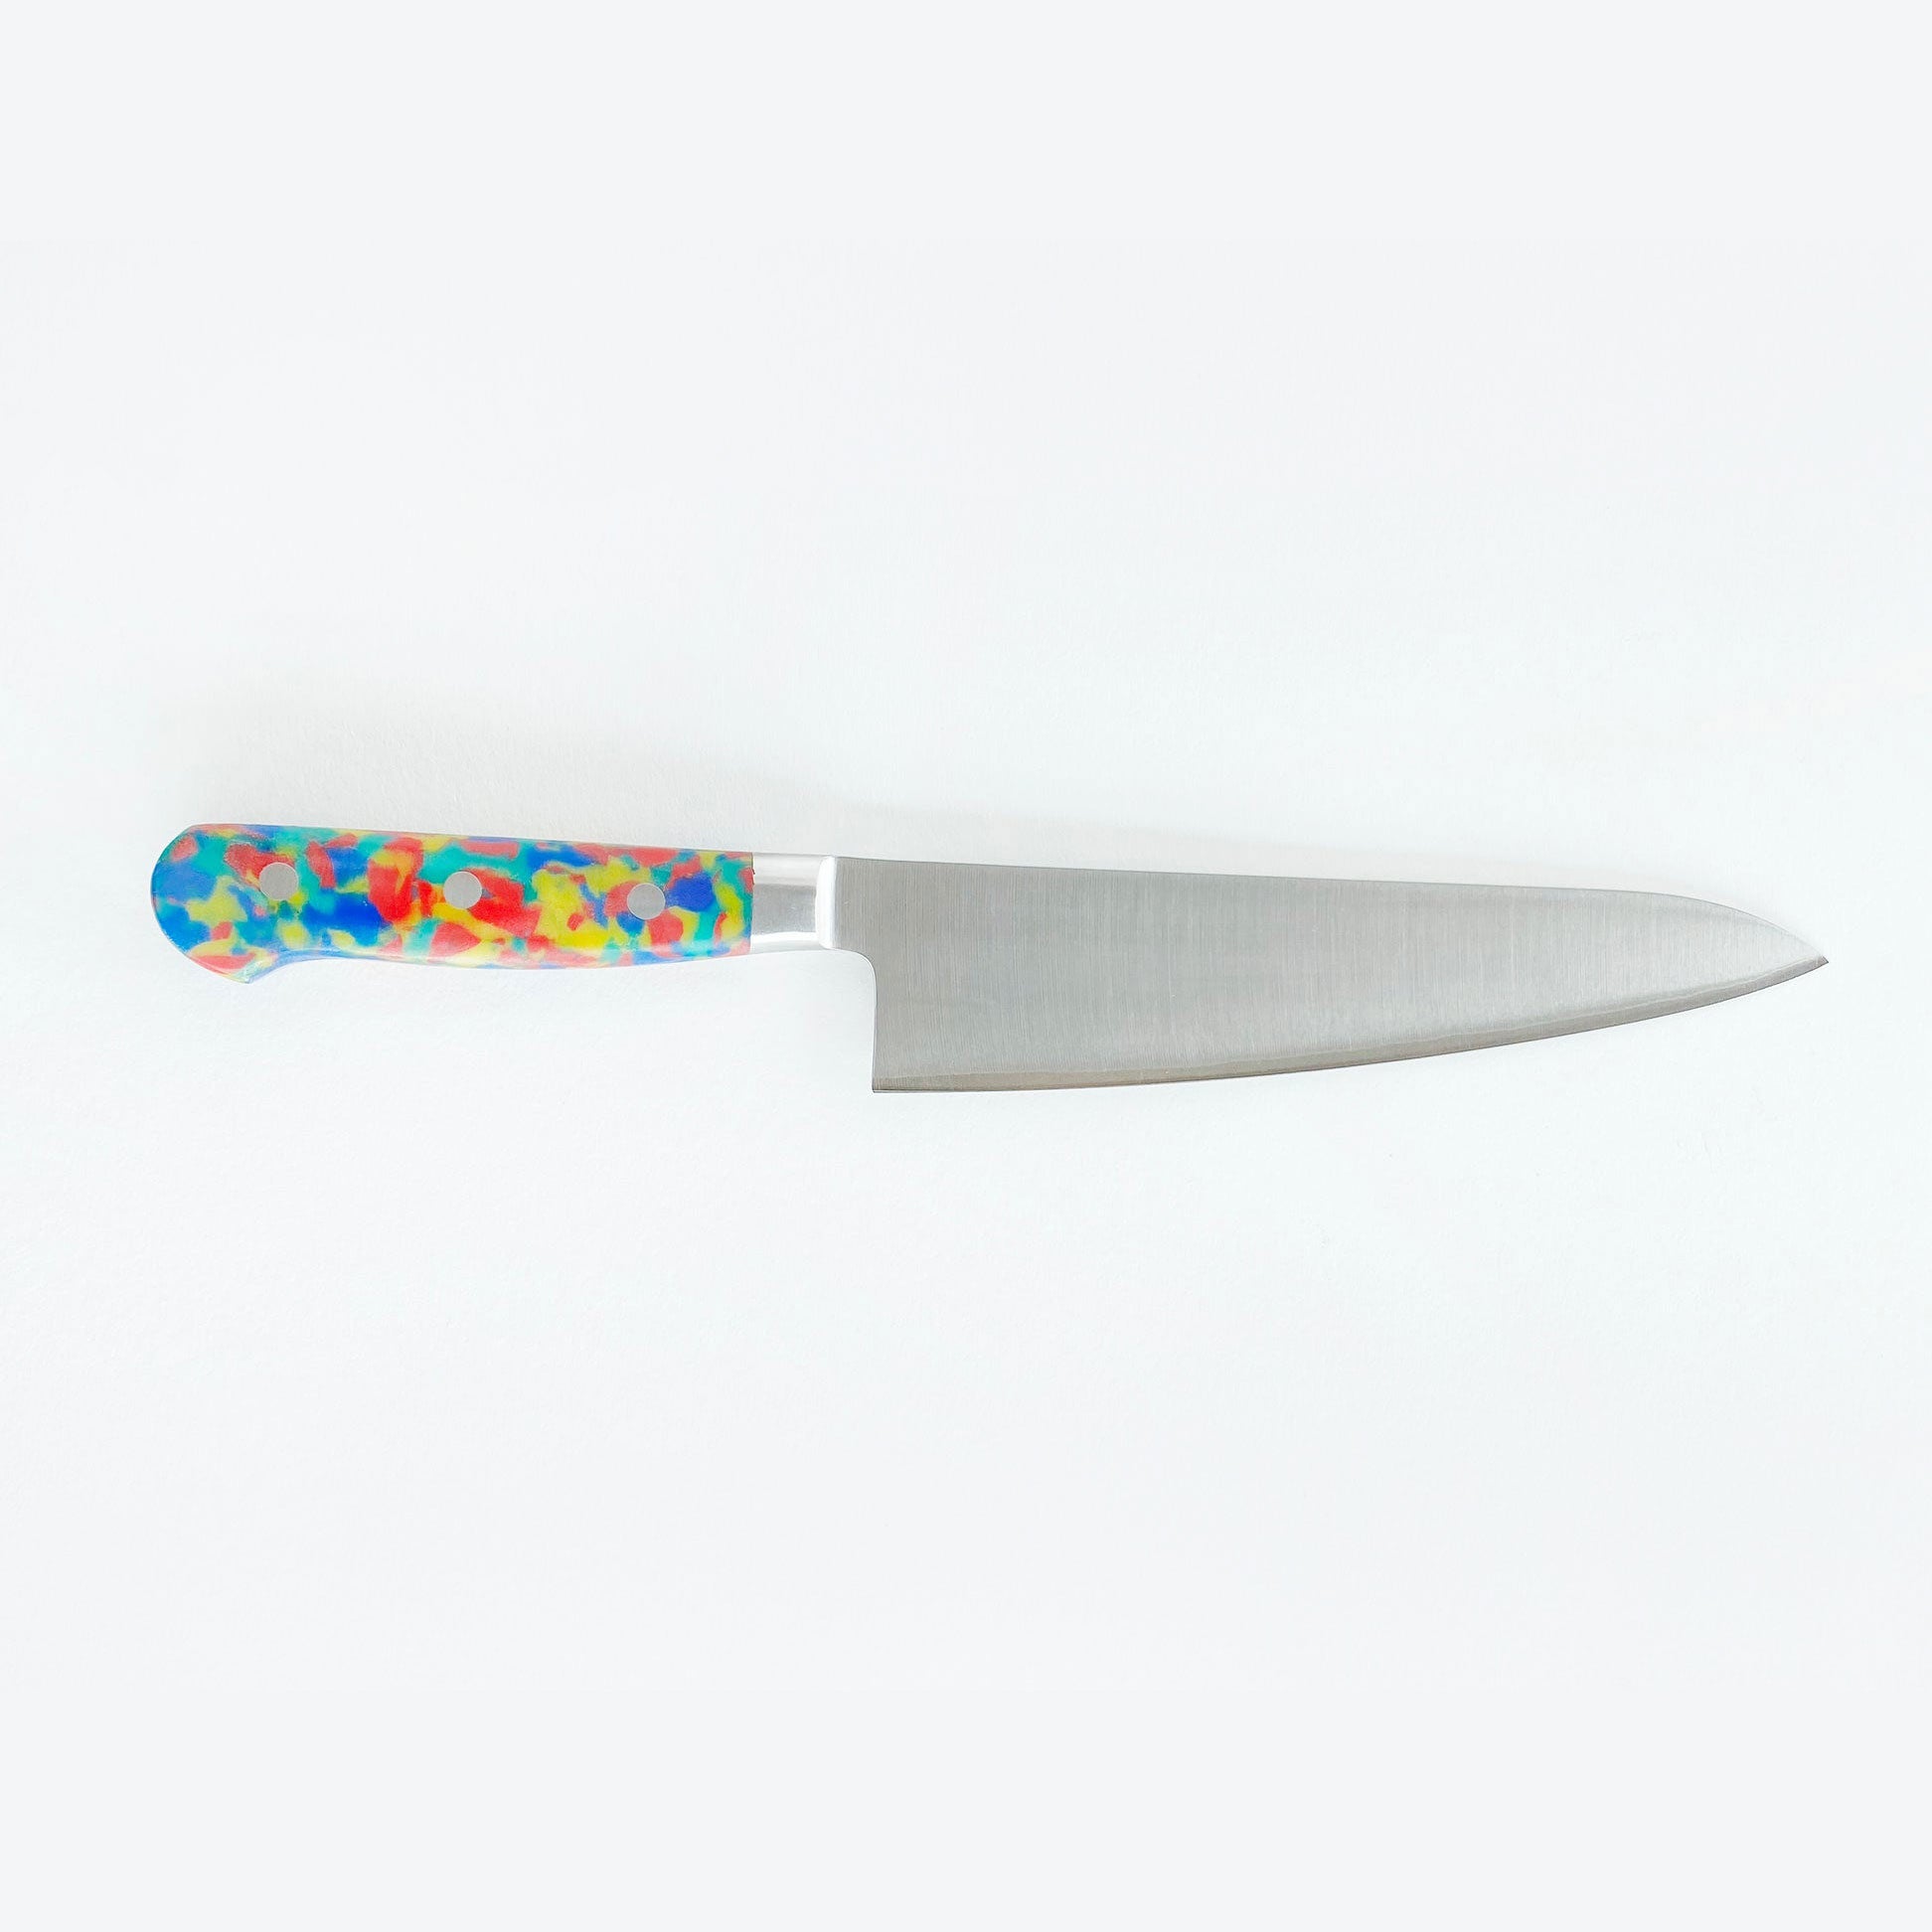 Fredericks and Mae Chef's Knife - Rainbow